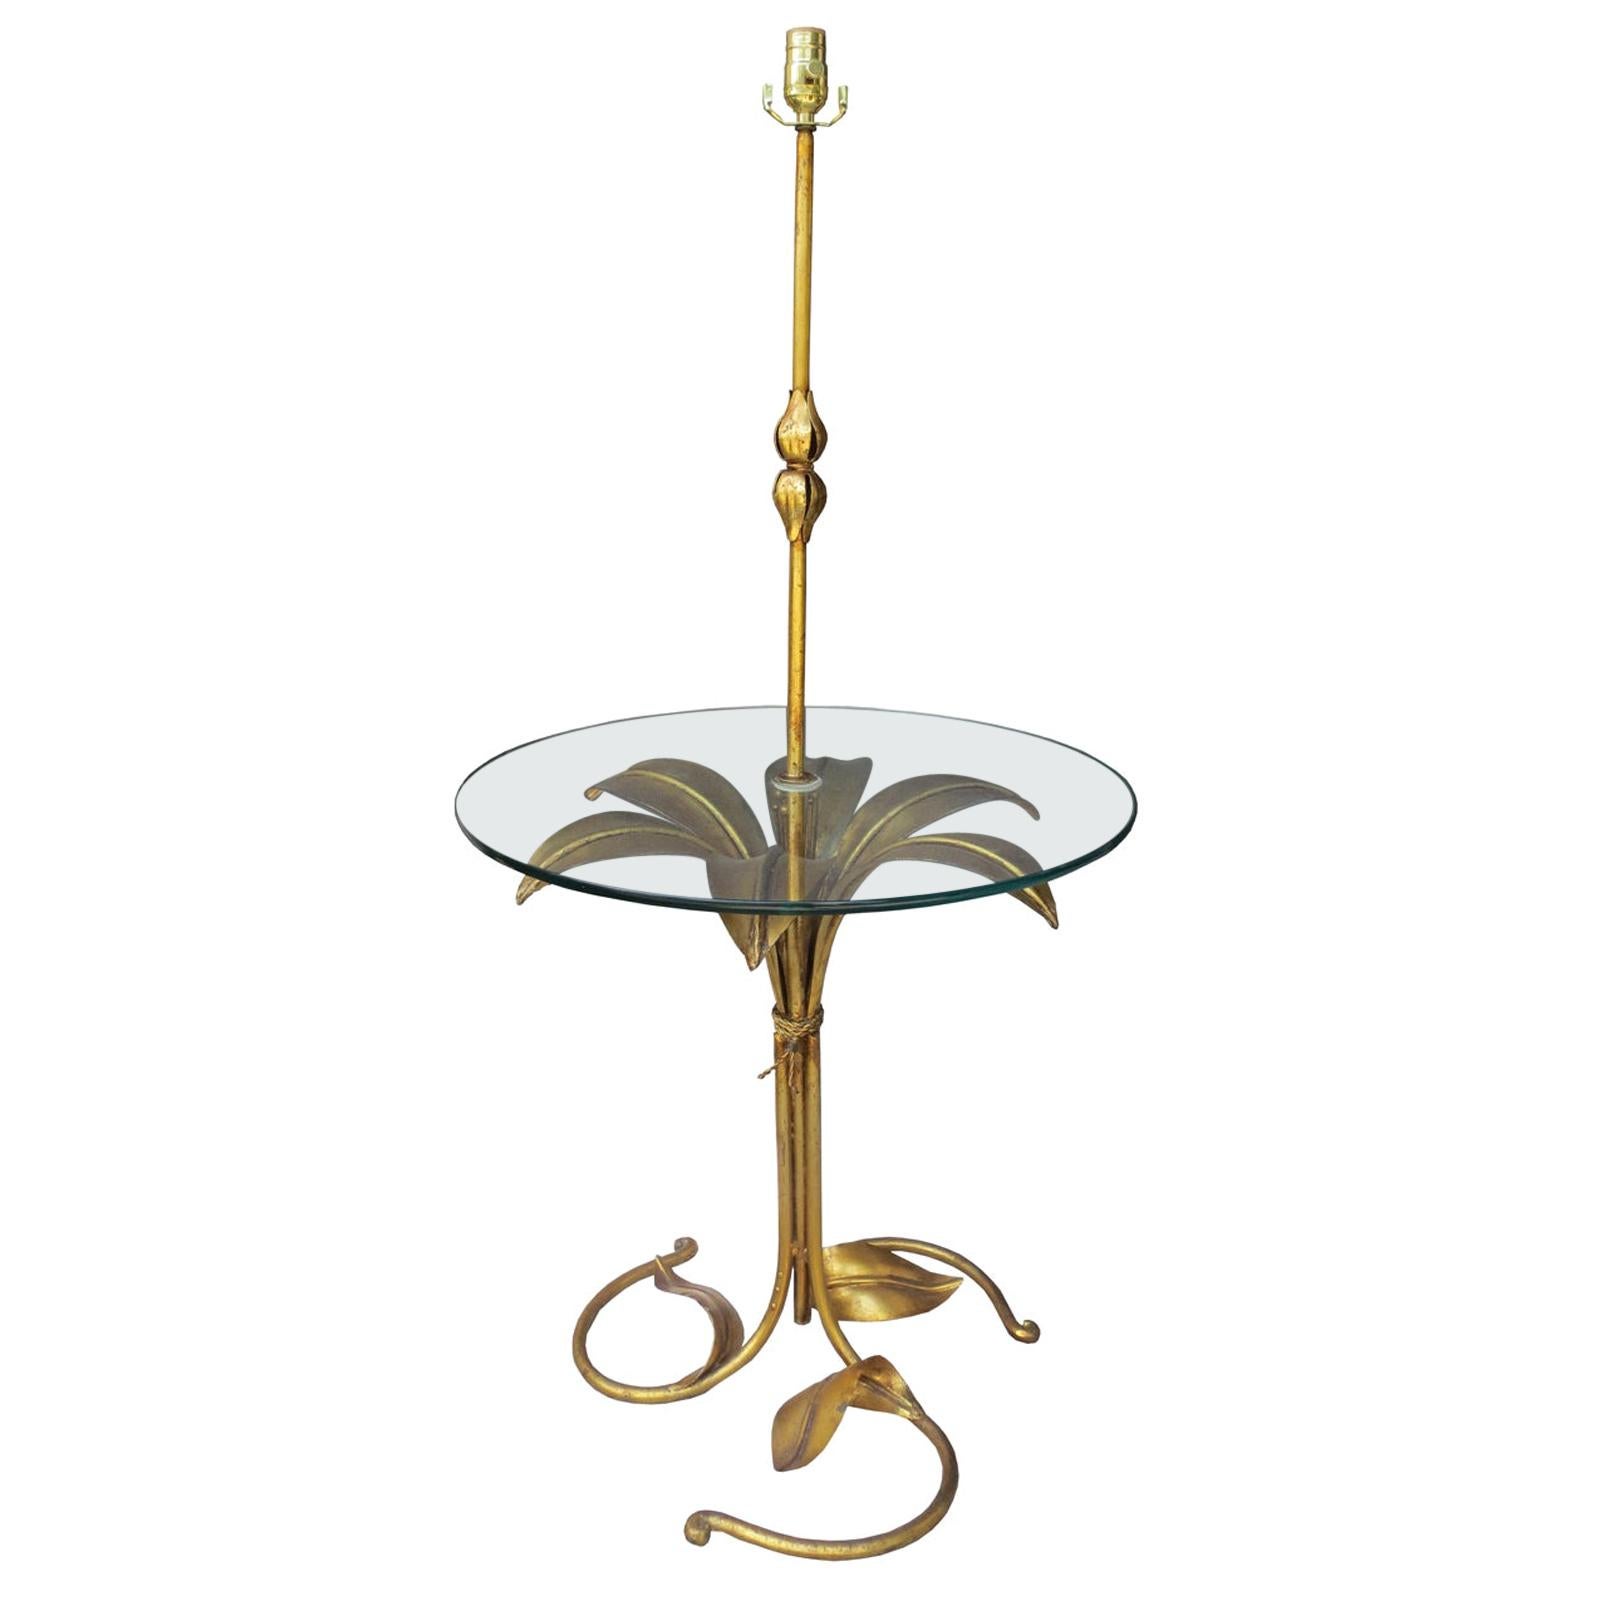 Mid-20th Century Italian Gilt Metal Floor Lamp with Clear Glass Table